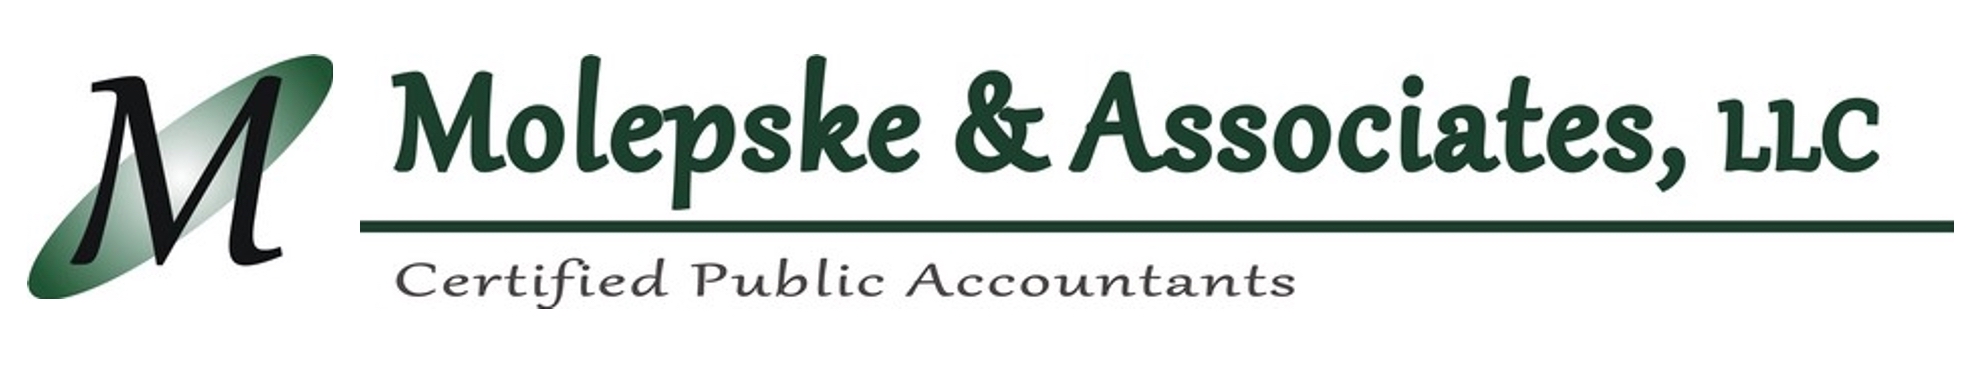 Molepske & Associates, LLC